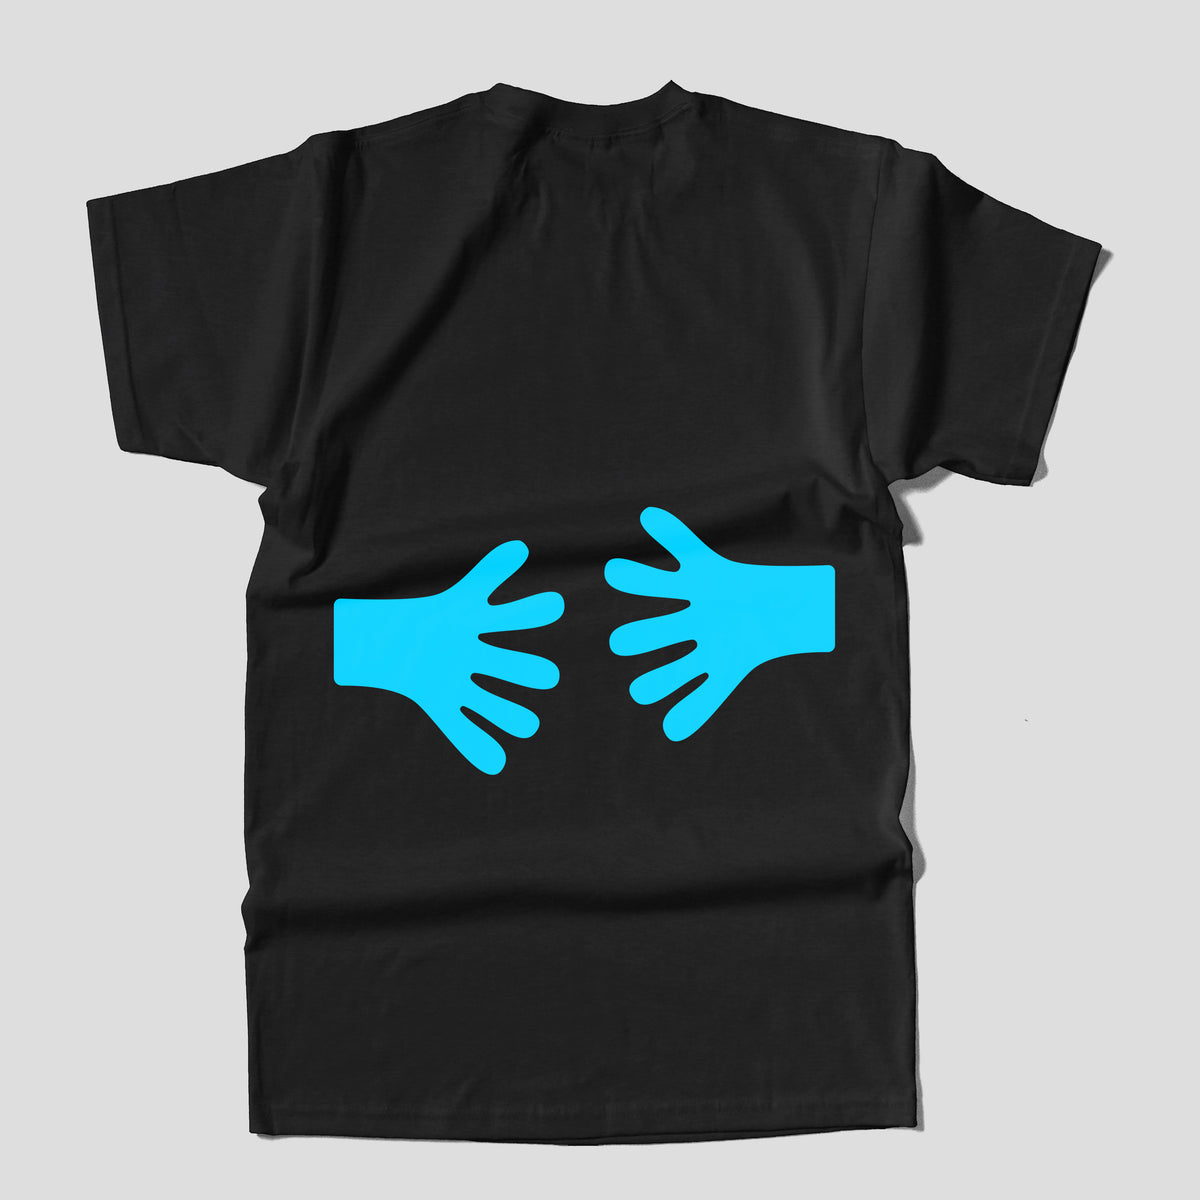 Hug - Back Sided Black T-shirt